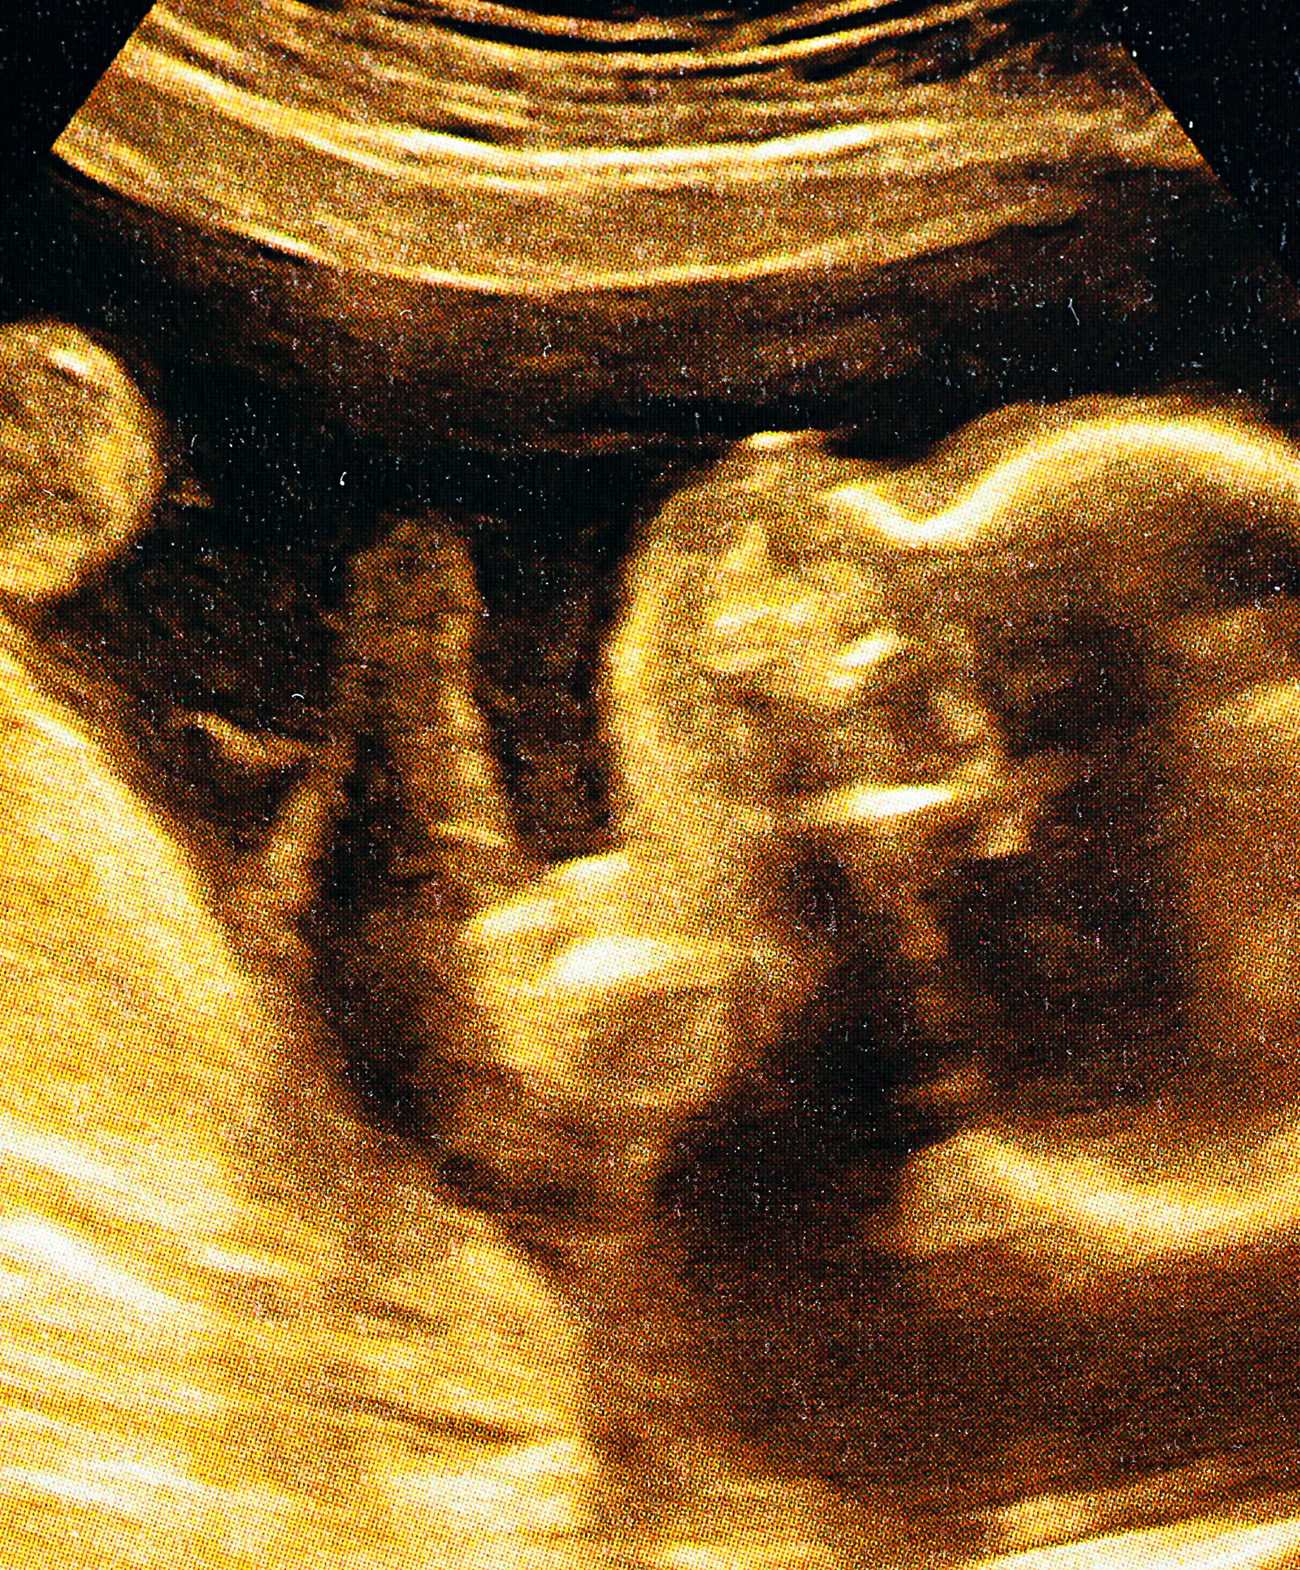 ultrasound image of a fetus